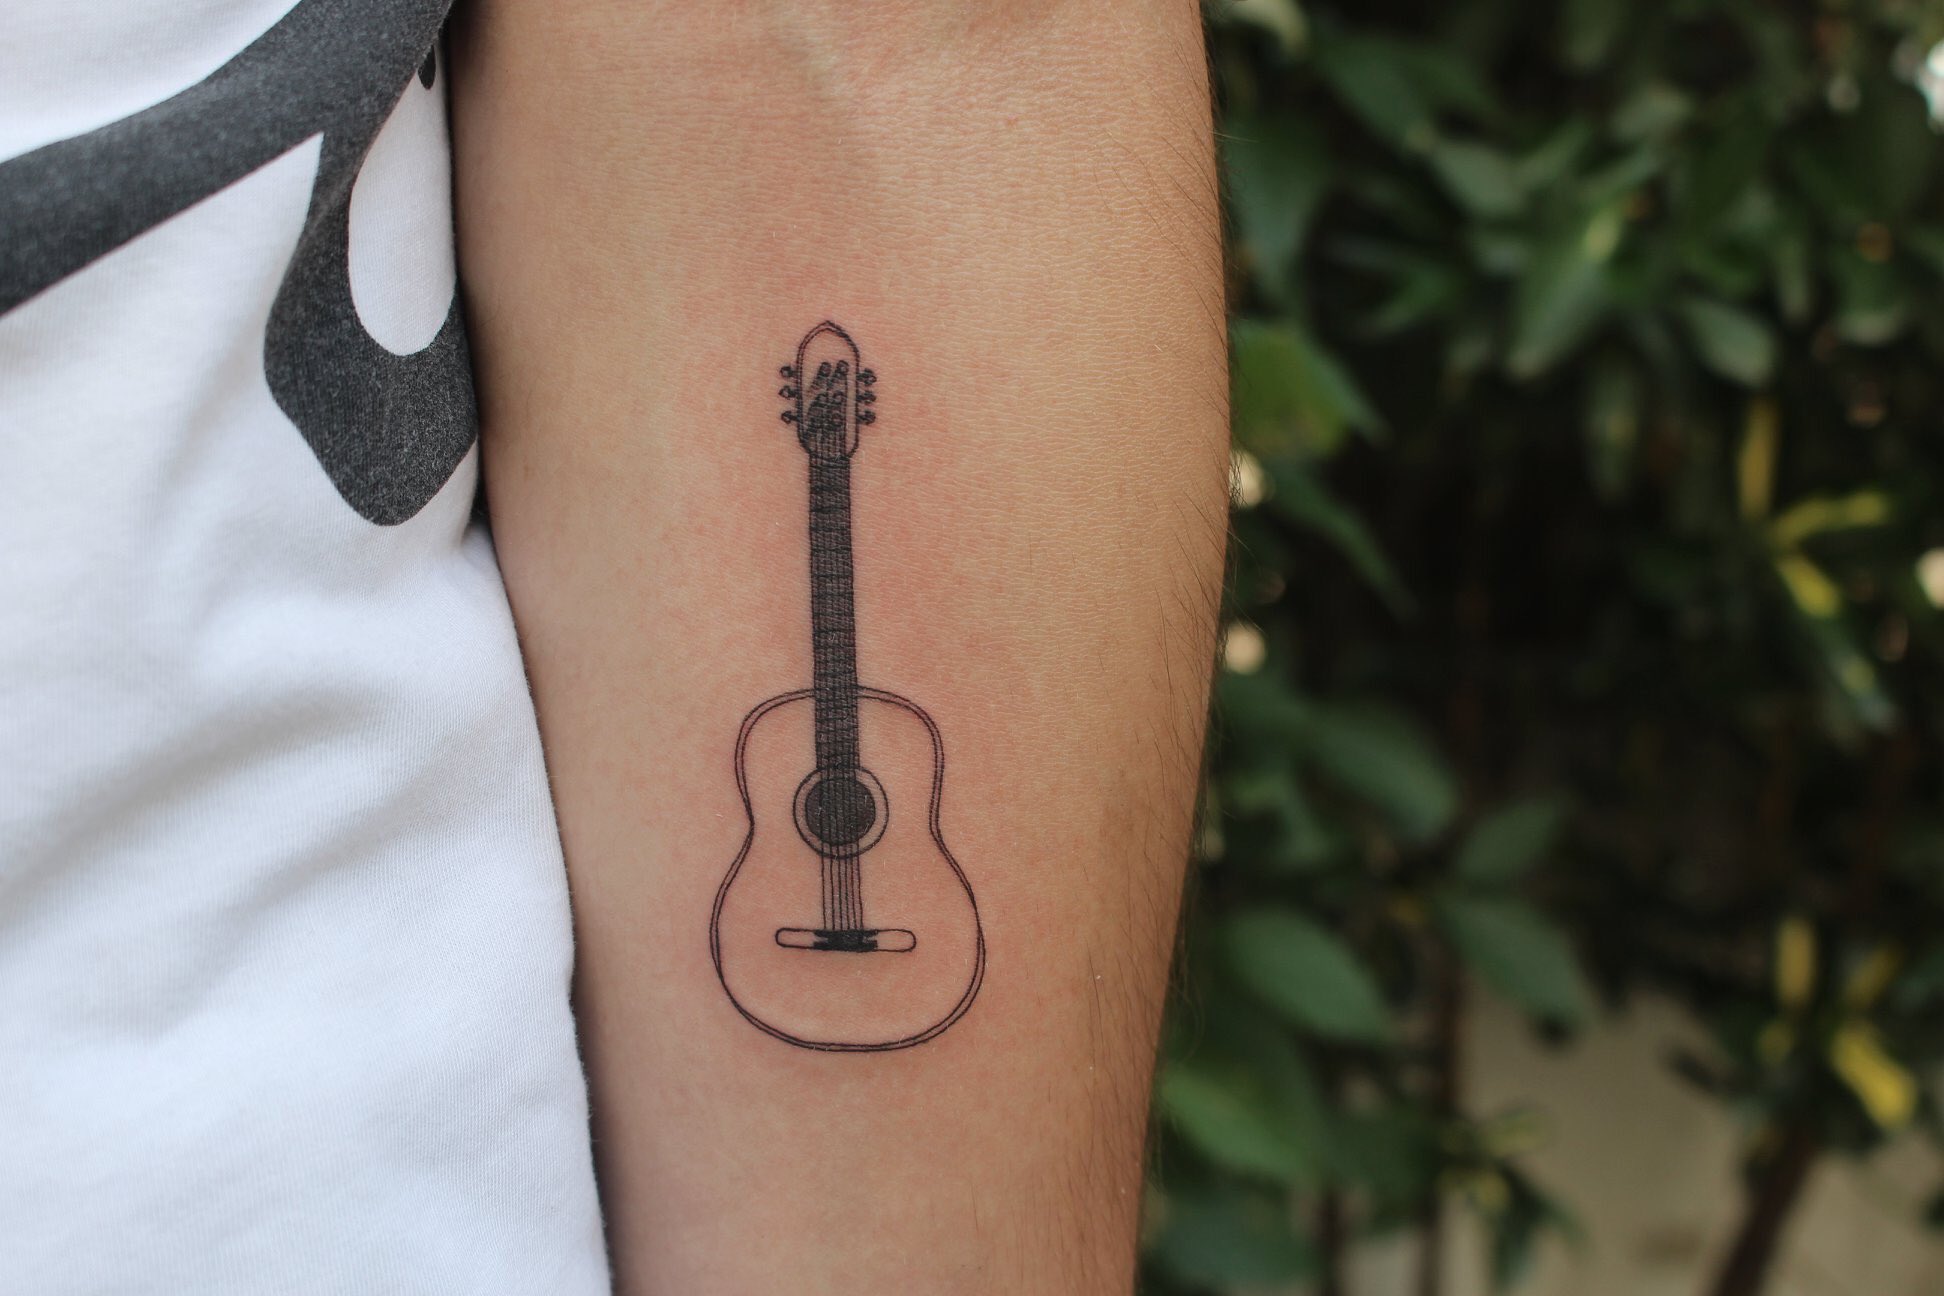 Minimalistic guitar tattoo located on the side boob.